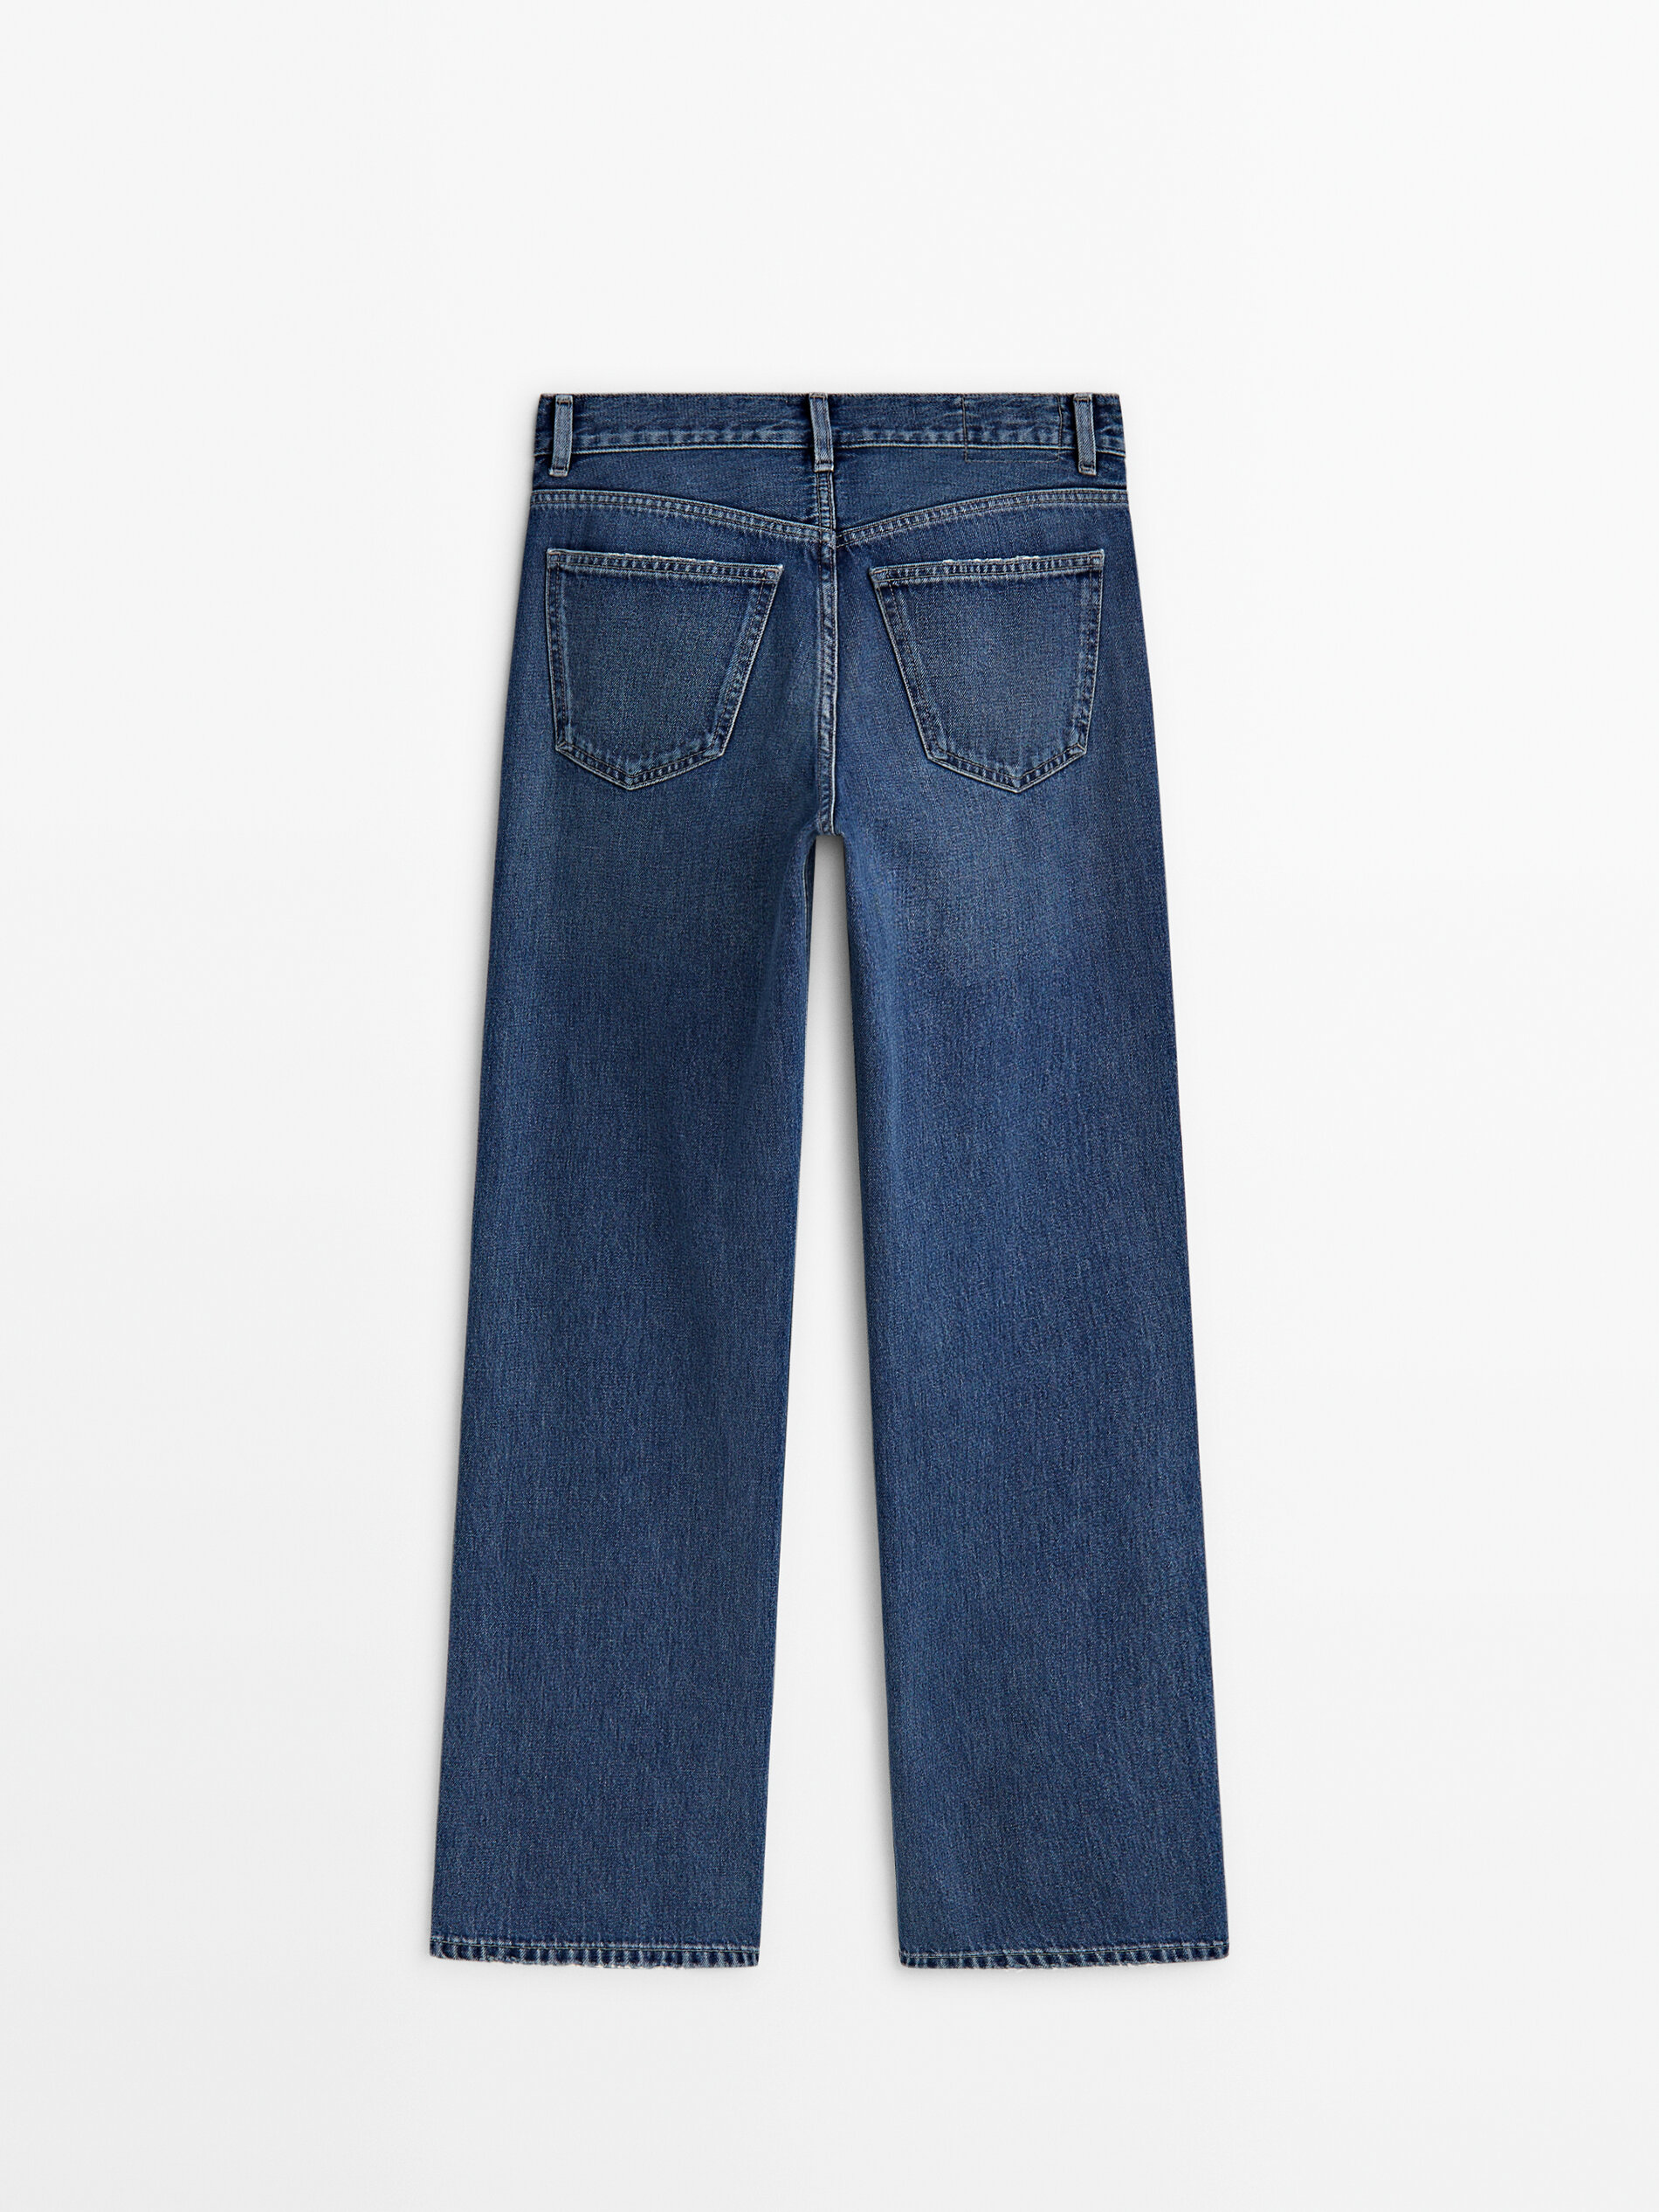 Jeans tiro medio corte recto full length